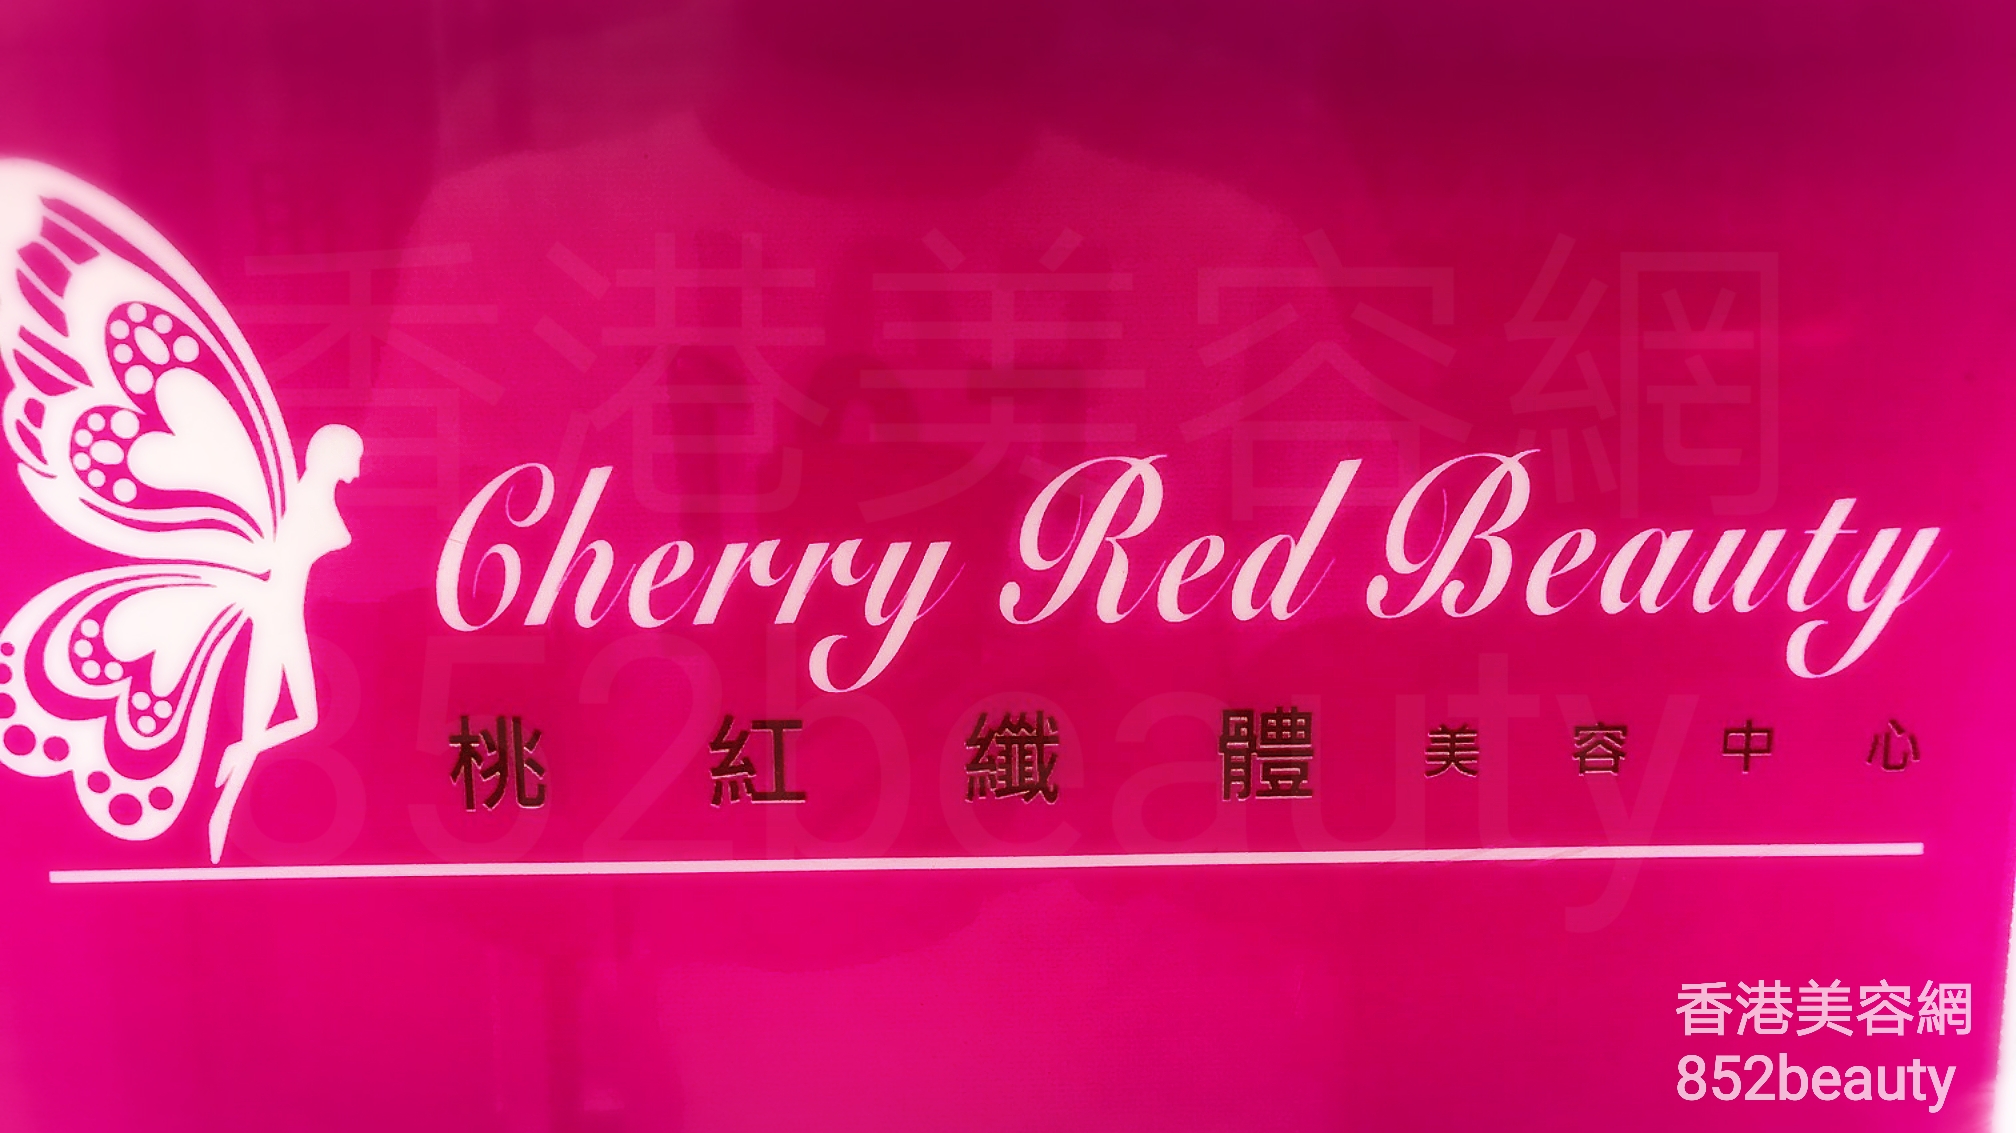 : Cherry Red Beauty 桃紅纖體美容中心